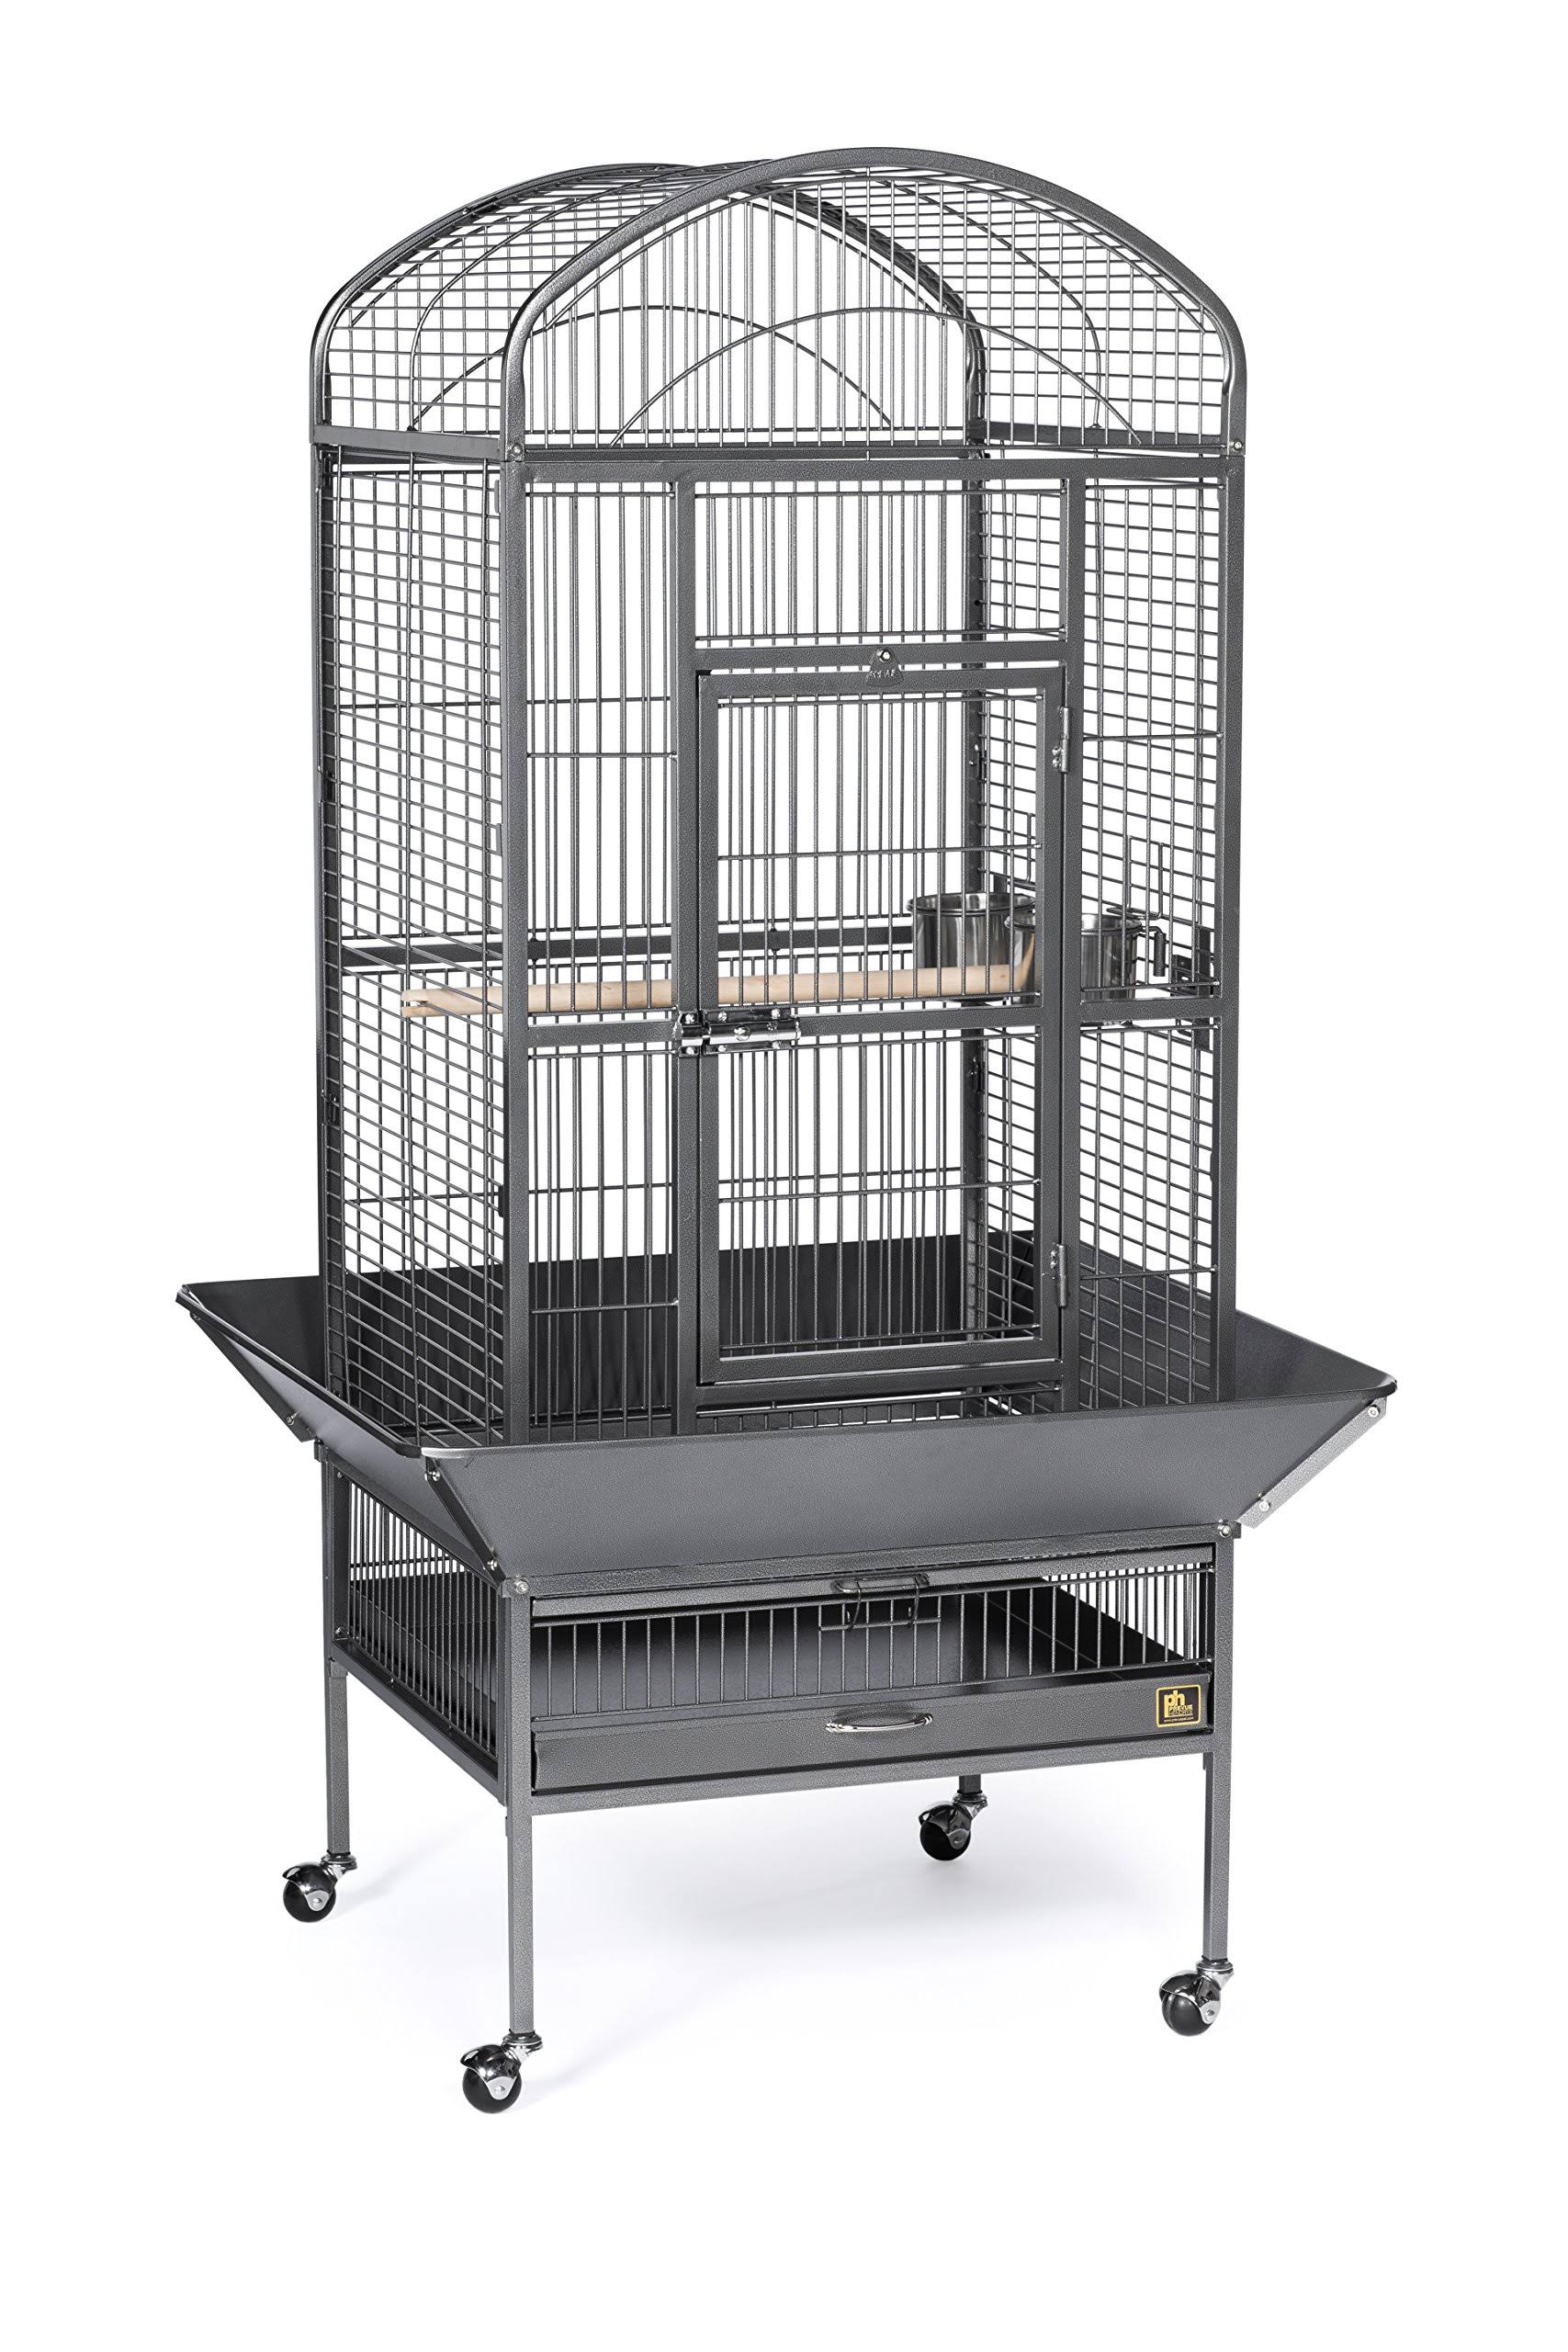 Prevue Pet Products Dometop Bird Cage Black - 34521